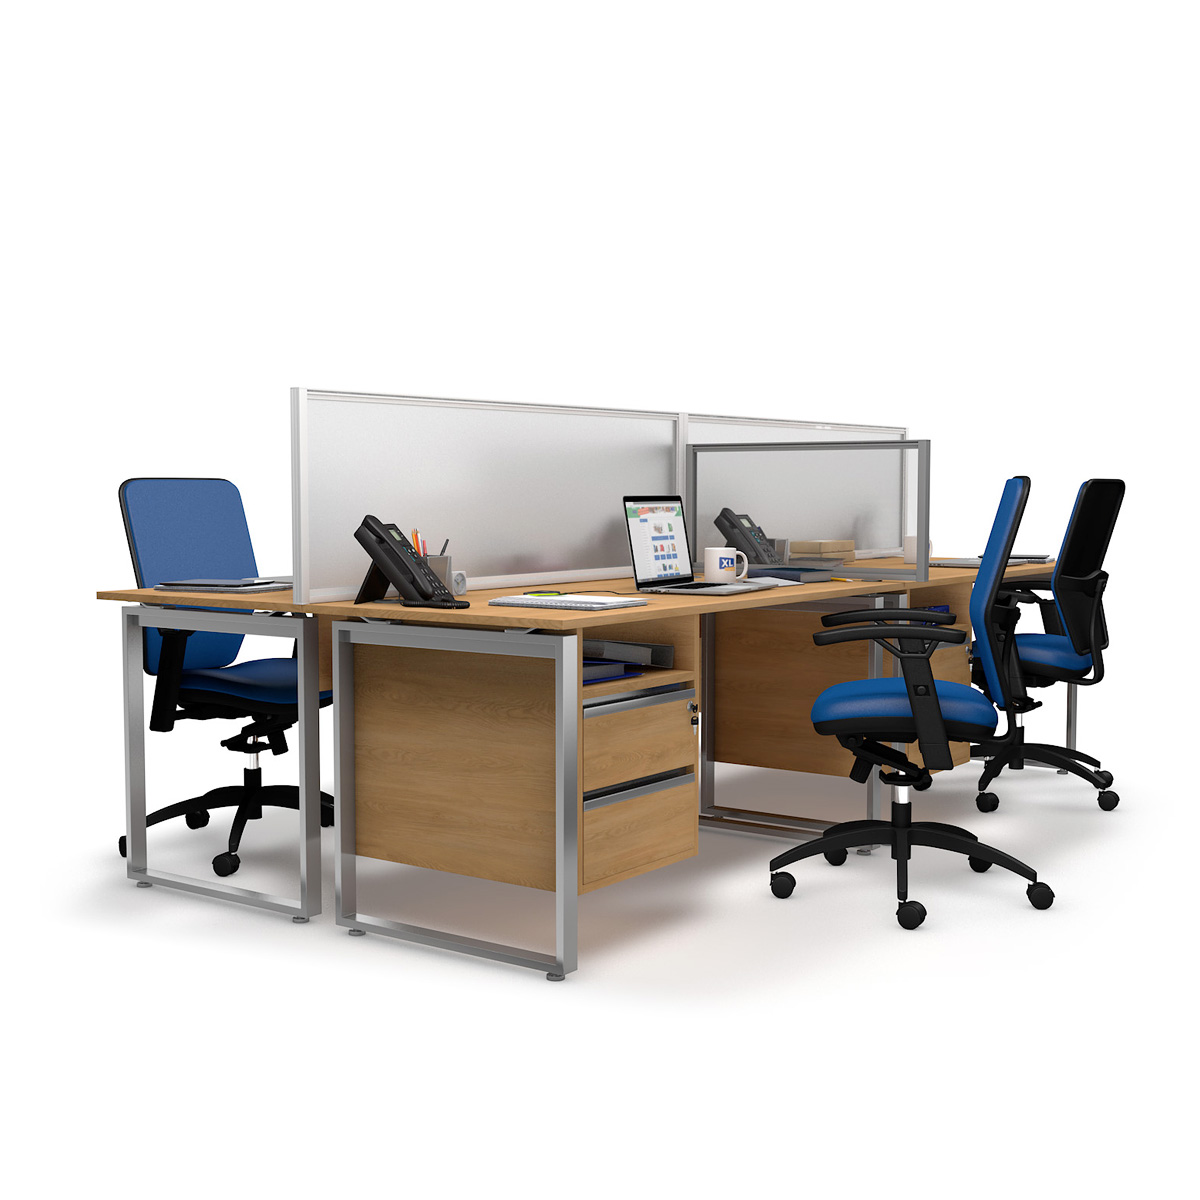 FRONTIER® Glazed Office Screen Desk Dividers